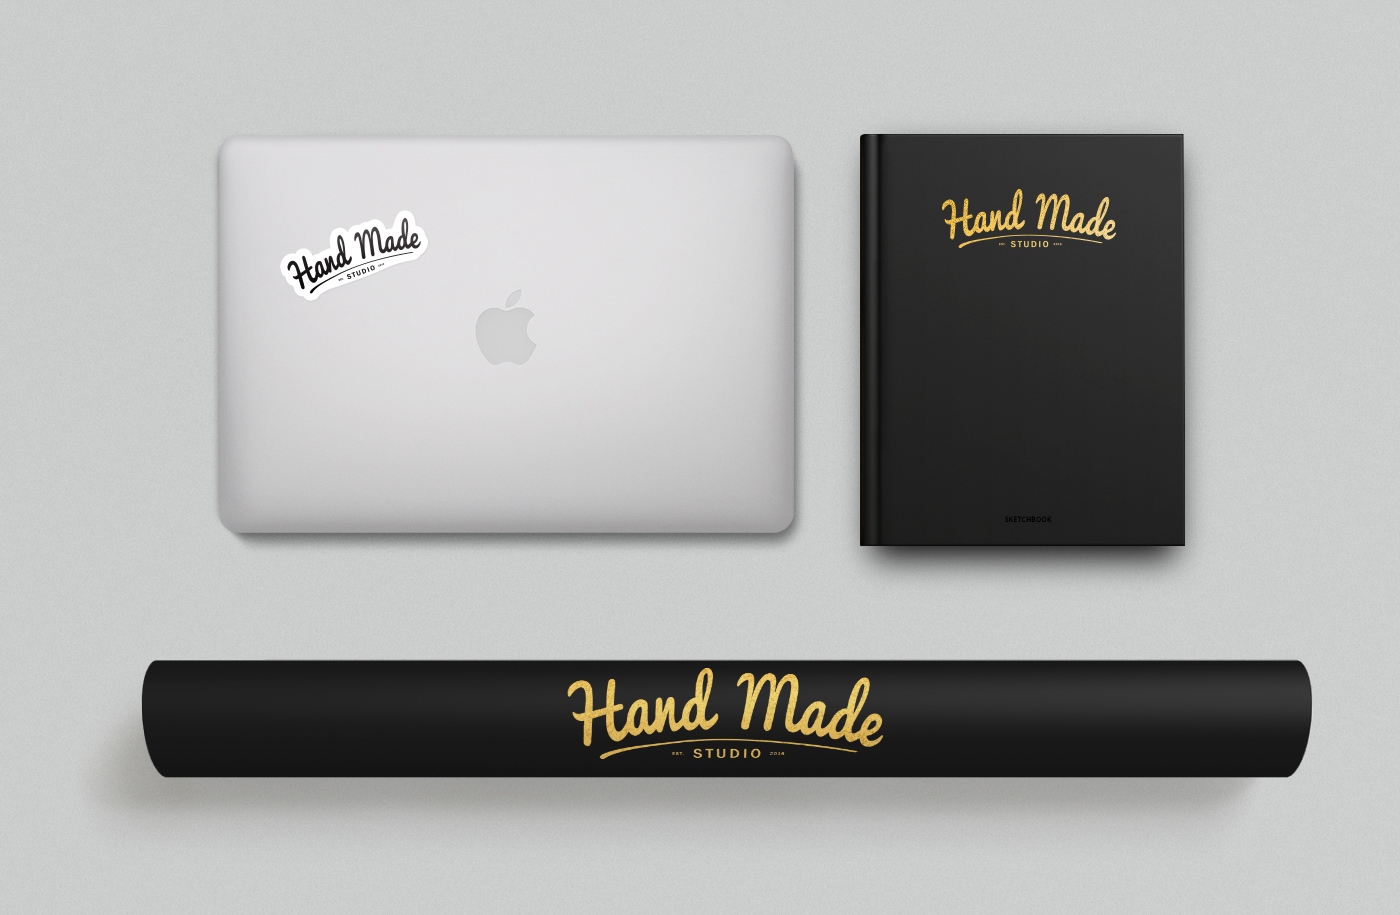 Hand Made Studio International Award concept studio branding and identity